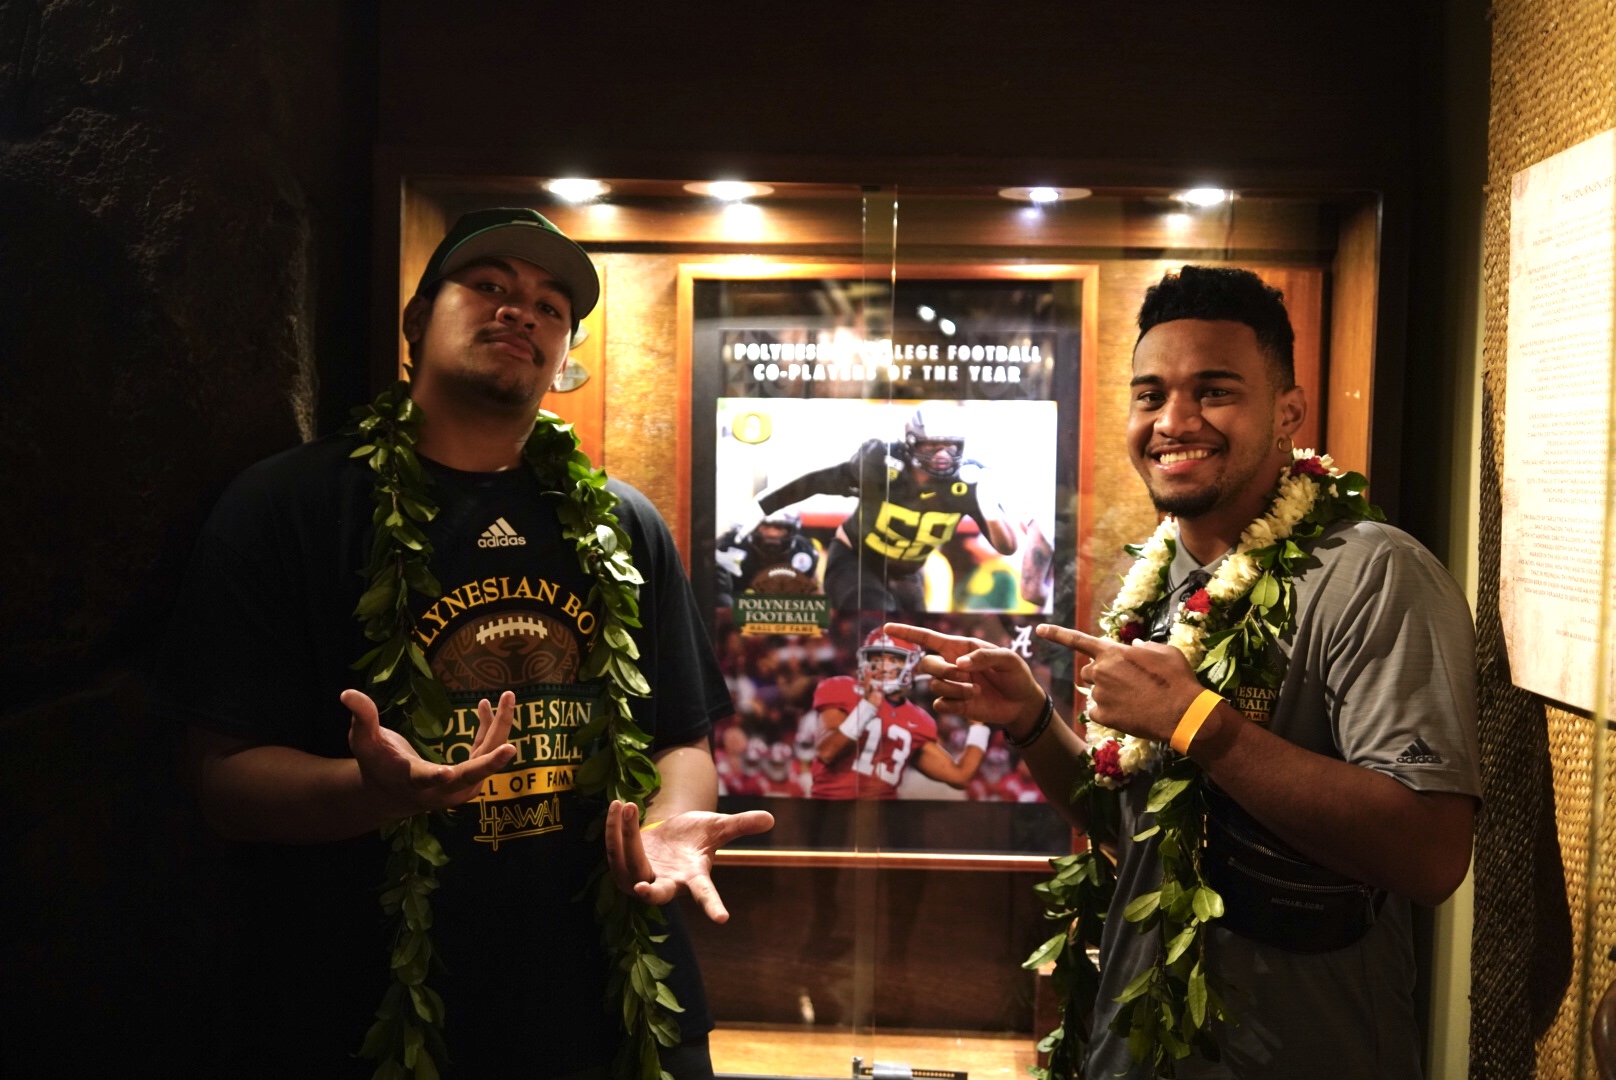 Penei Sewell and Tua Tagovailoa honored as Polynesian College Football Co-Players of the Year.